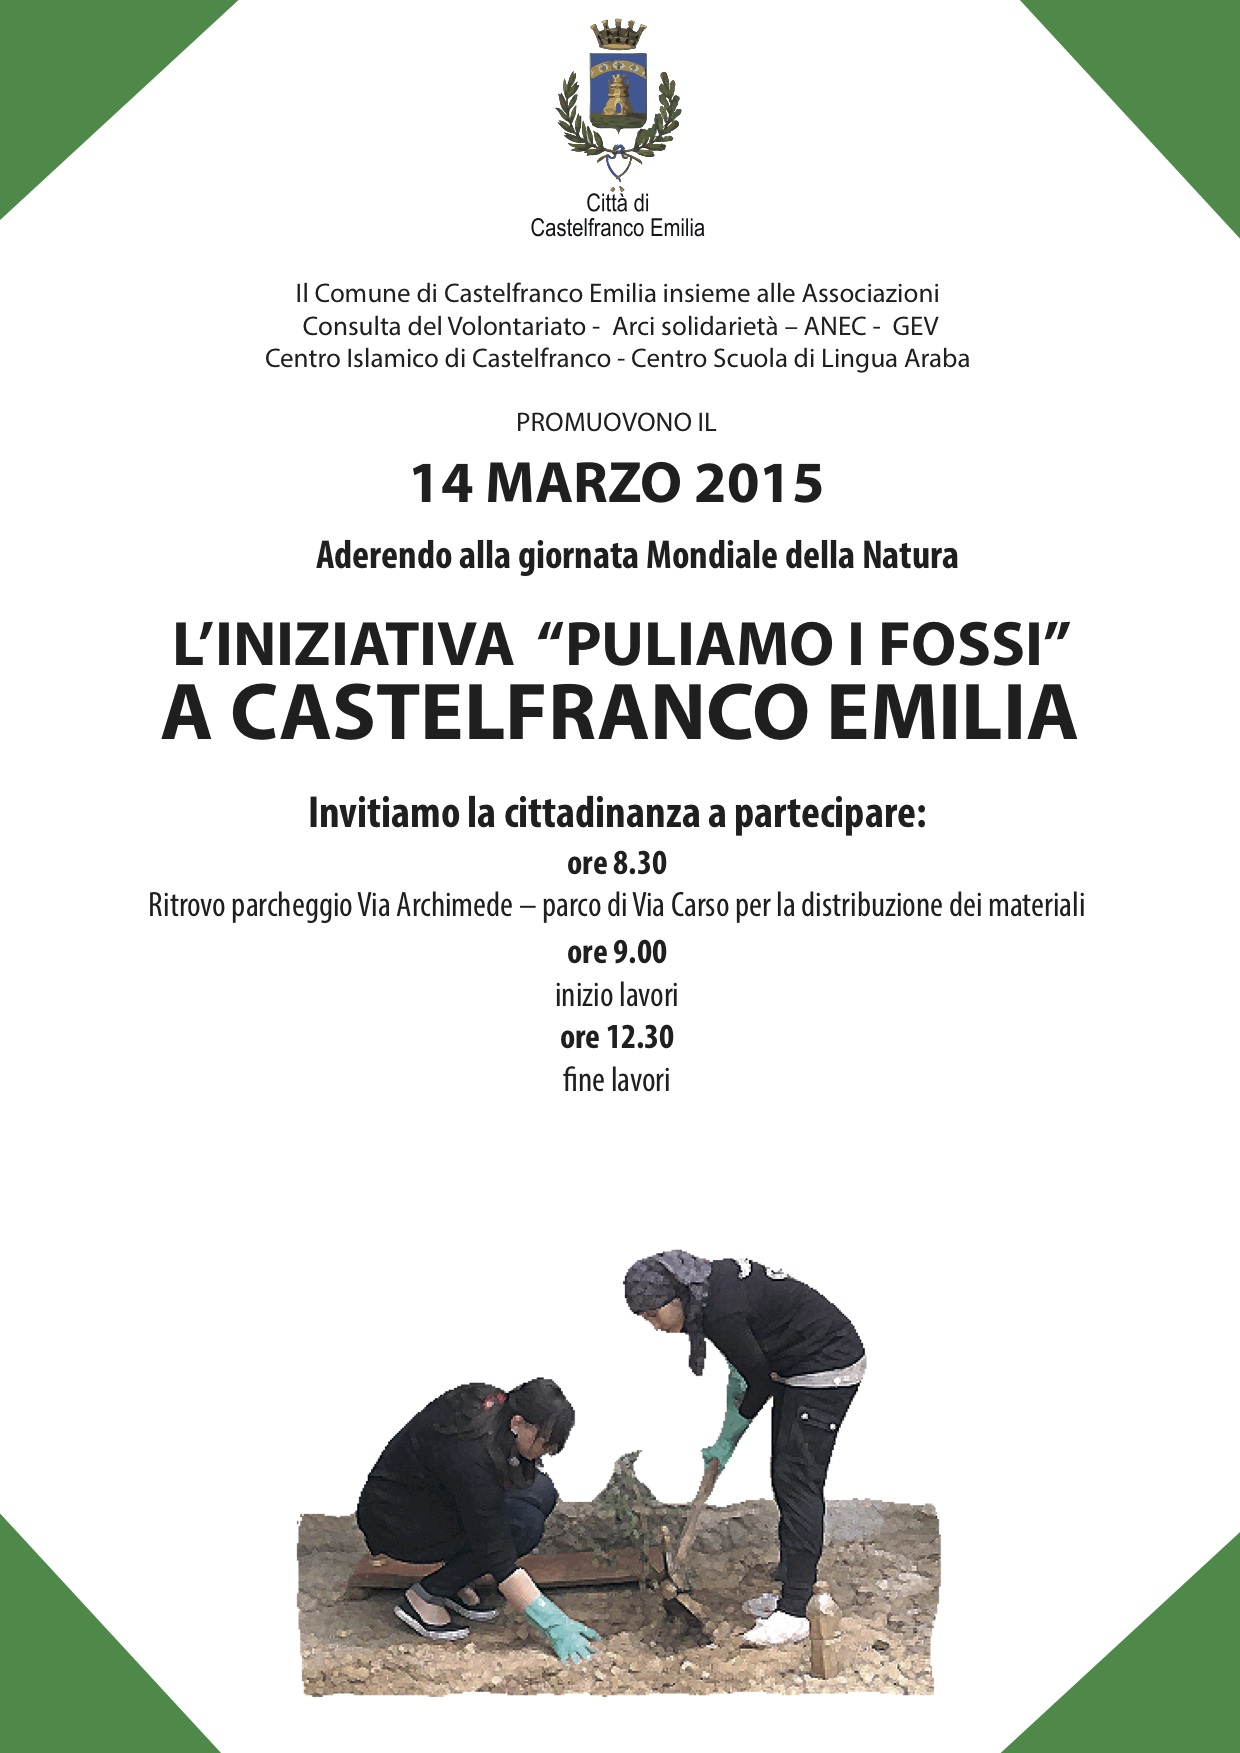 Sabato 14 marzo iniziativa 'Puliamo i fossi' a Castelfranco Emilia 